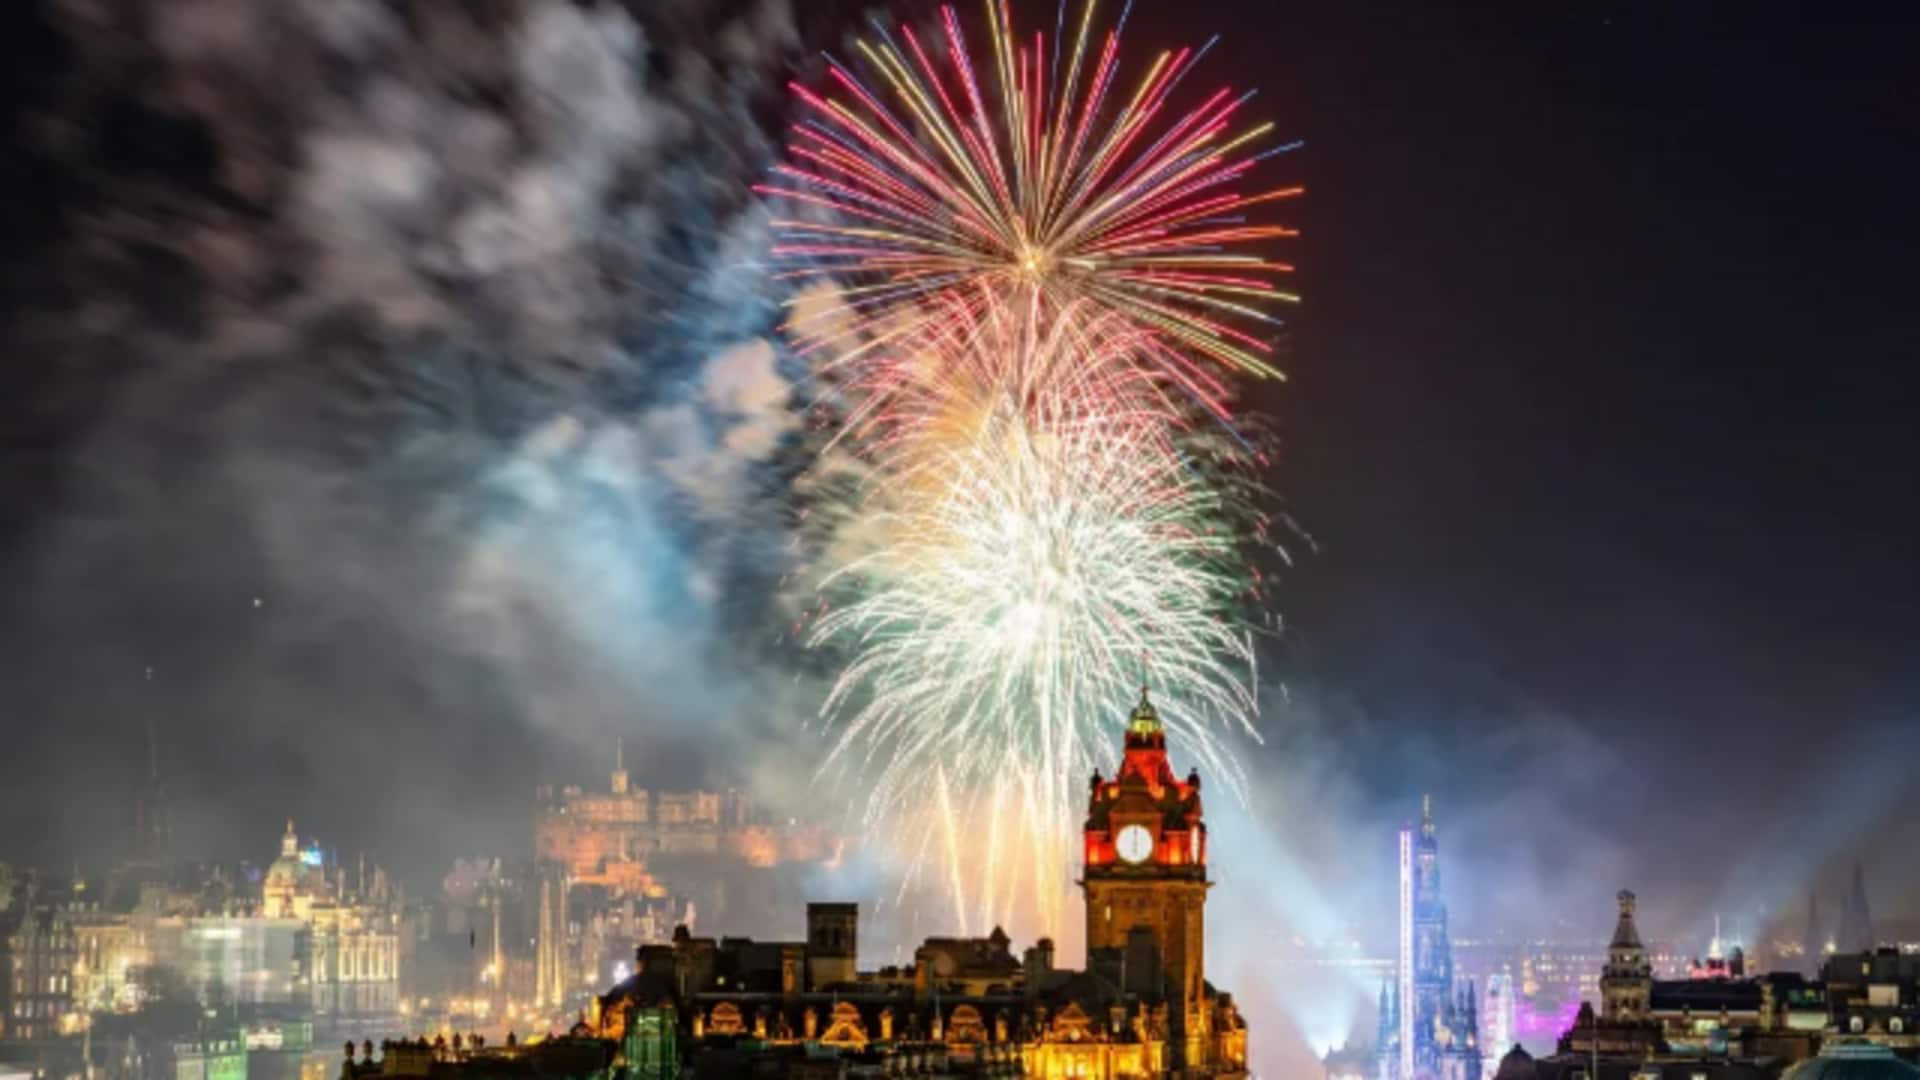 Edinburgh's Hogmanay: A festival that is renowned worldwide